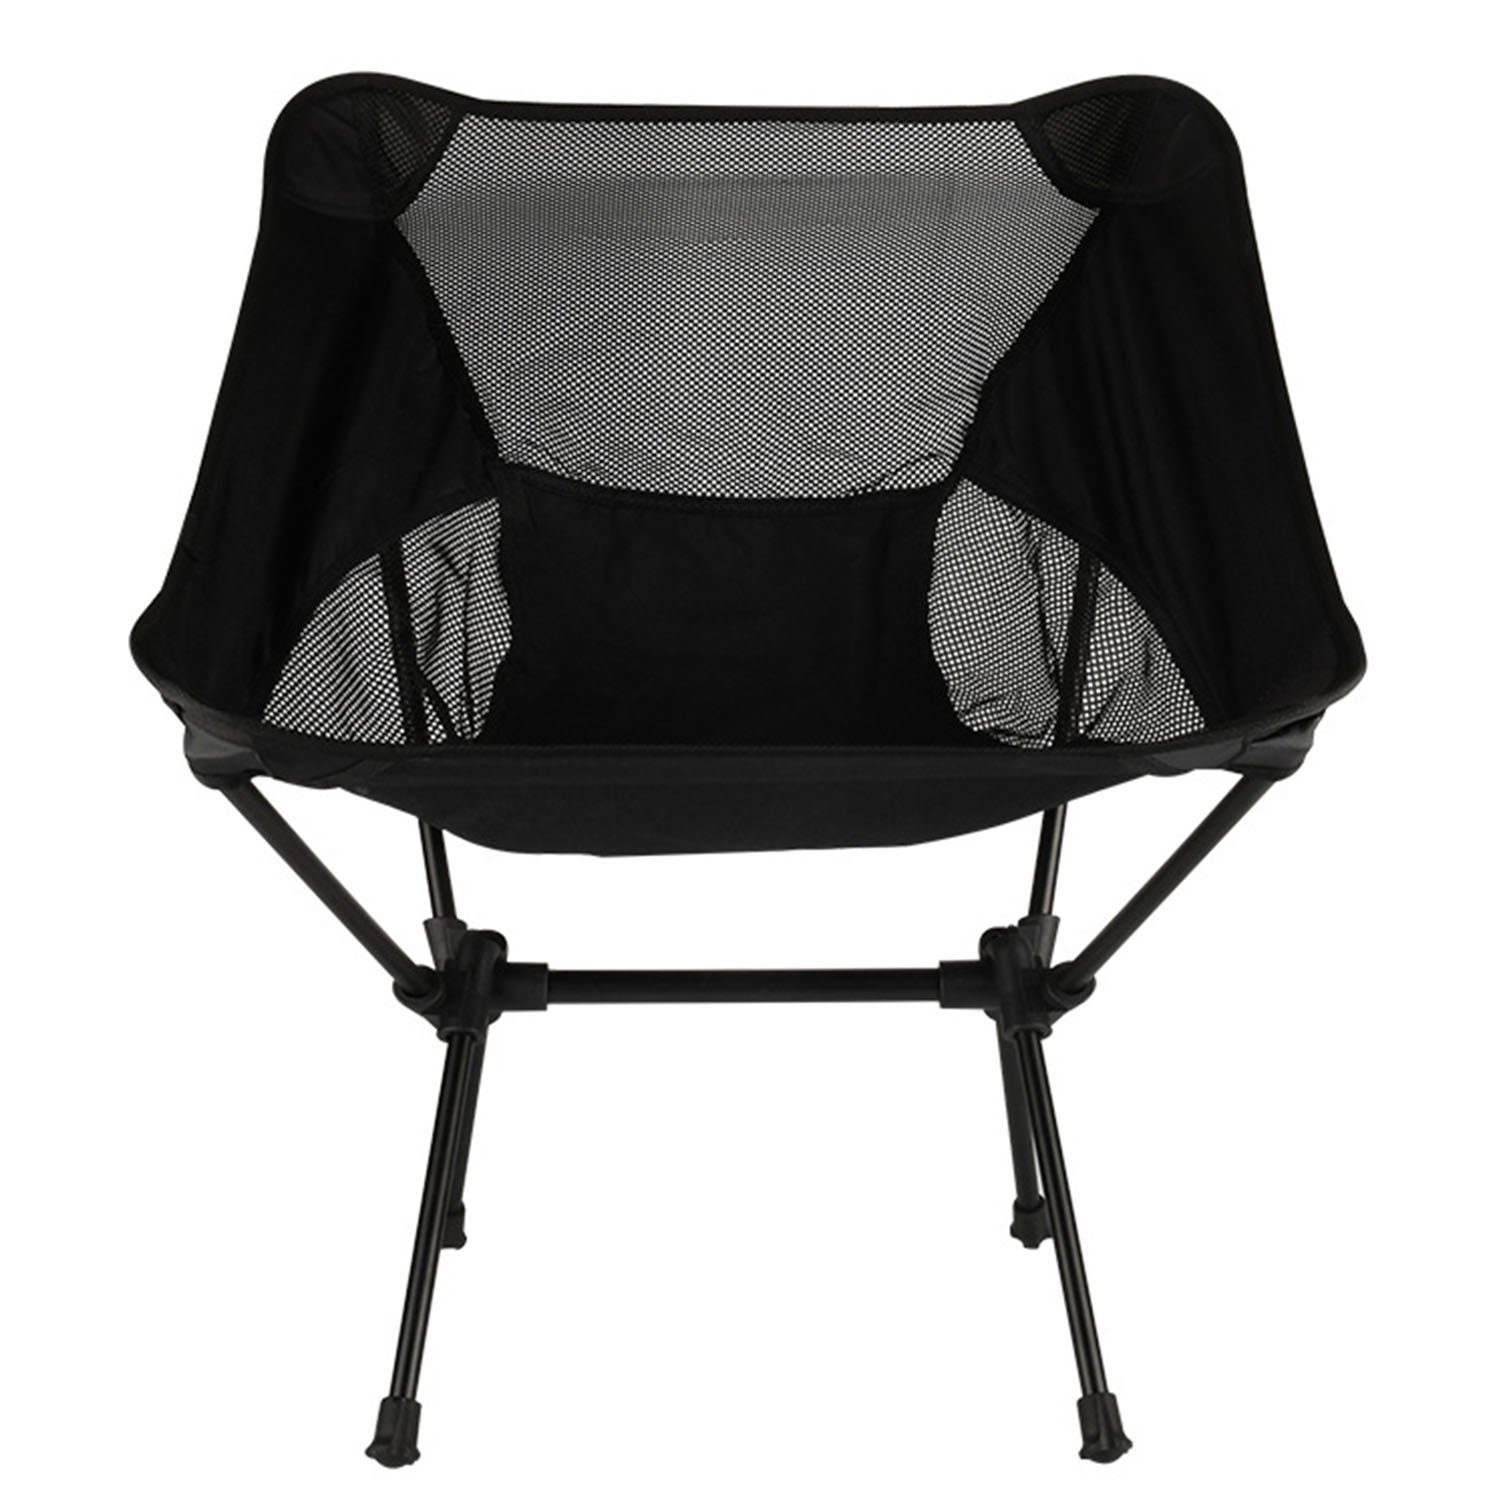 MAGICSHE Klappstuhl Camping Stuhl, 120 ultra Faltbar, Freien, Picknick, Reise Stuhl leichter im kg, schwarz Tragfähigkeit Outdoor Stuhl